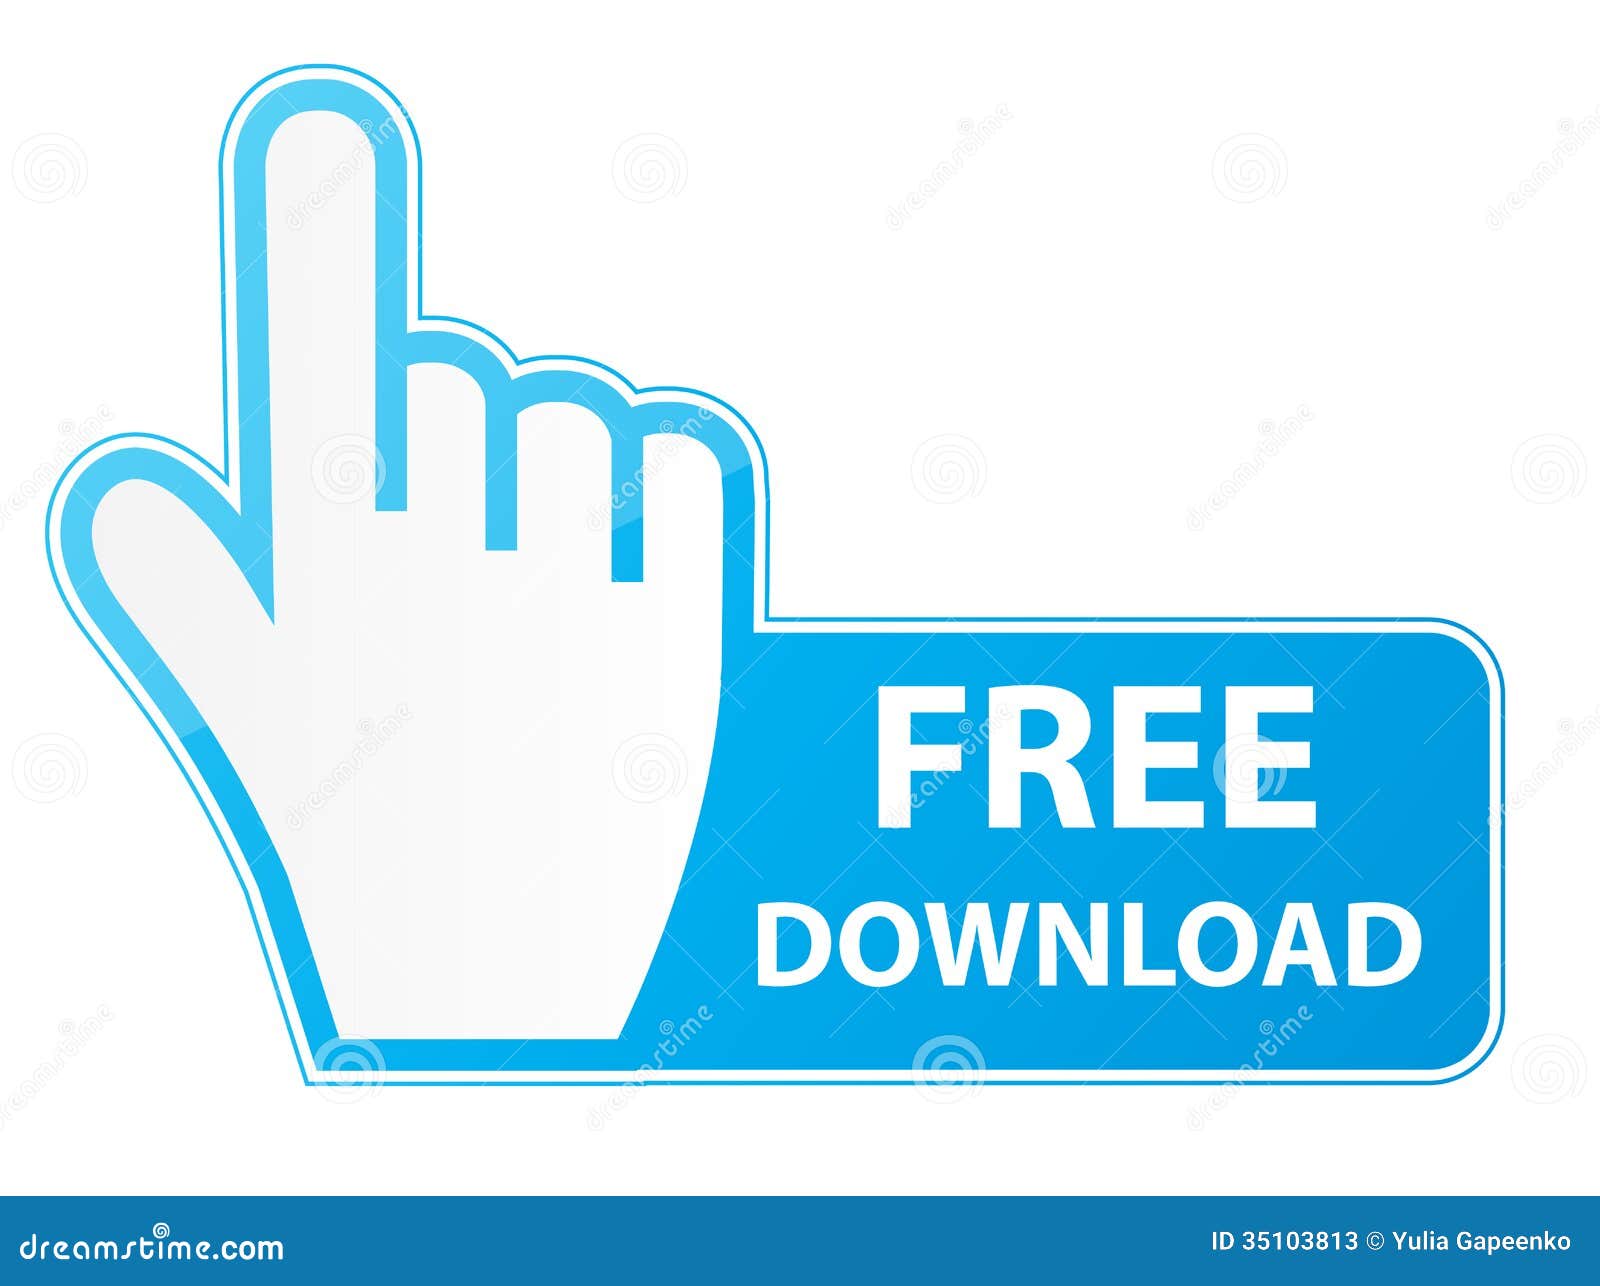 AutoCAD 20.1 Crack  Product Key Full Download